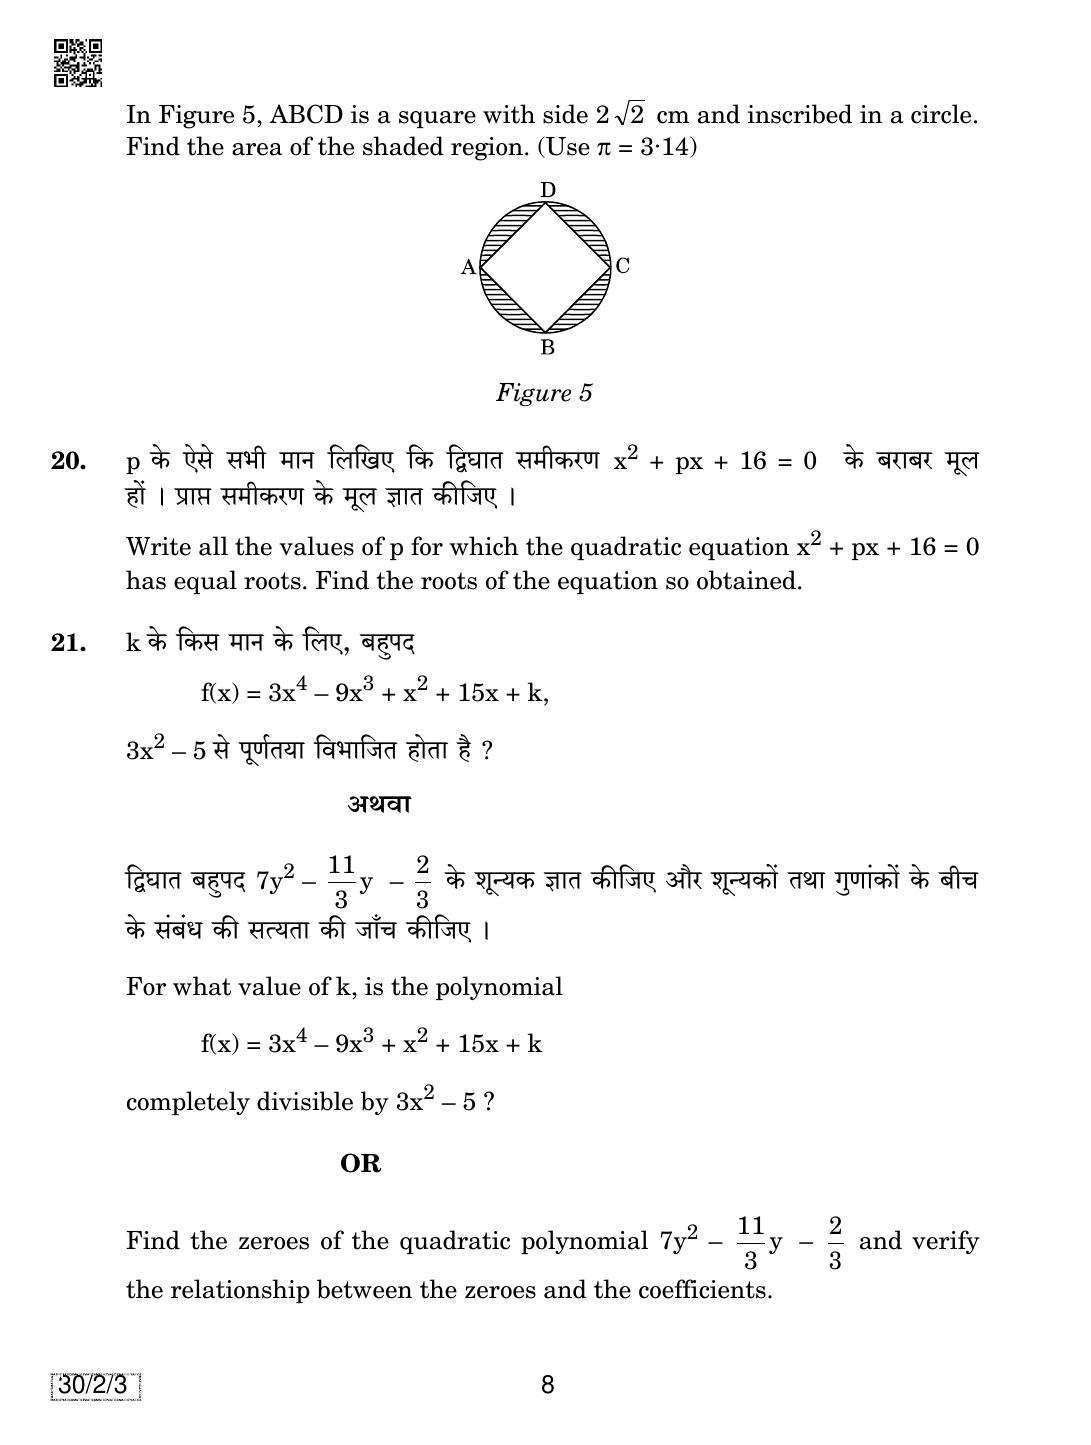 CBSE Class 10 Maths (30/2/3 - SET 3) 2019 Question Paper - Page 8